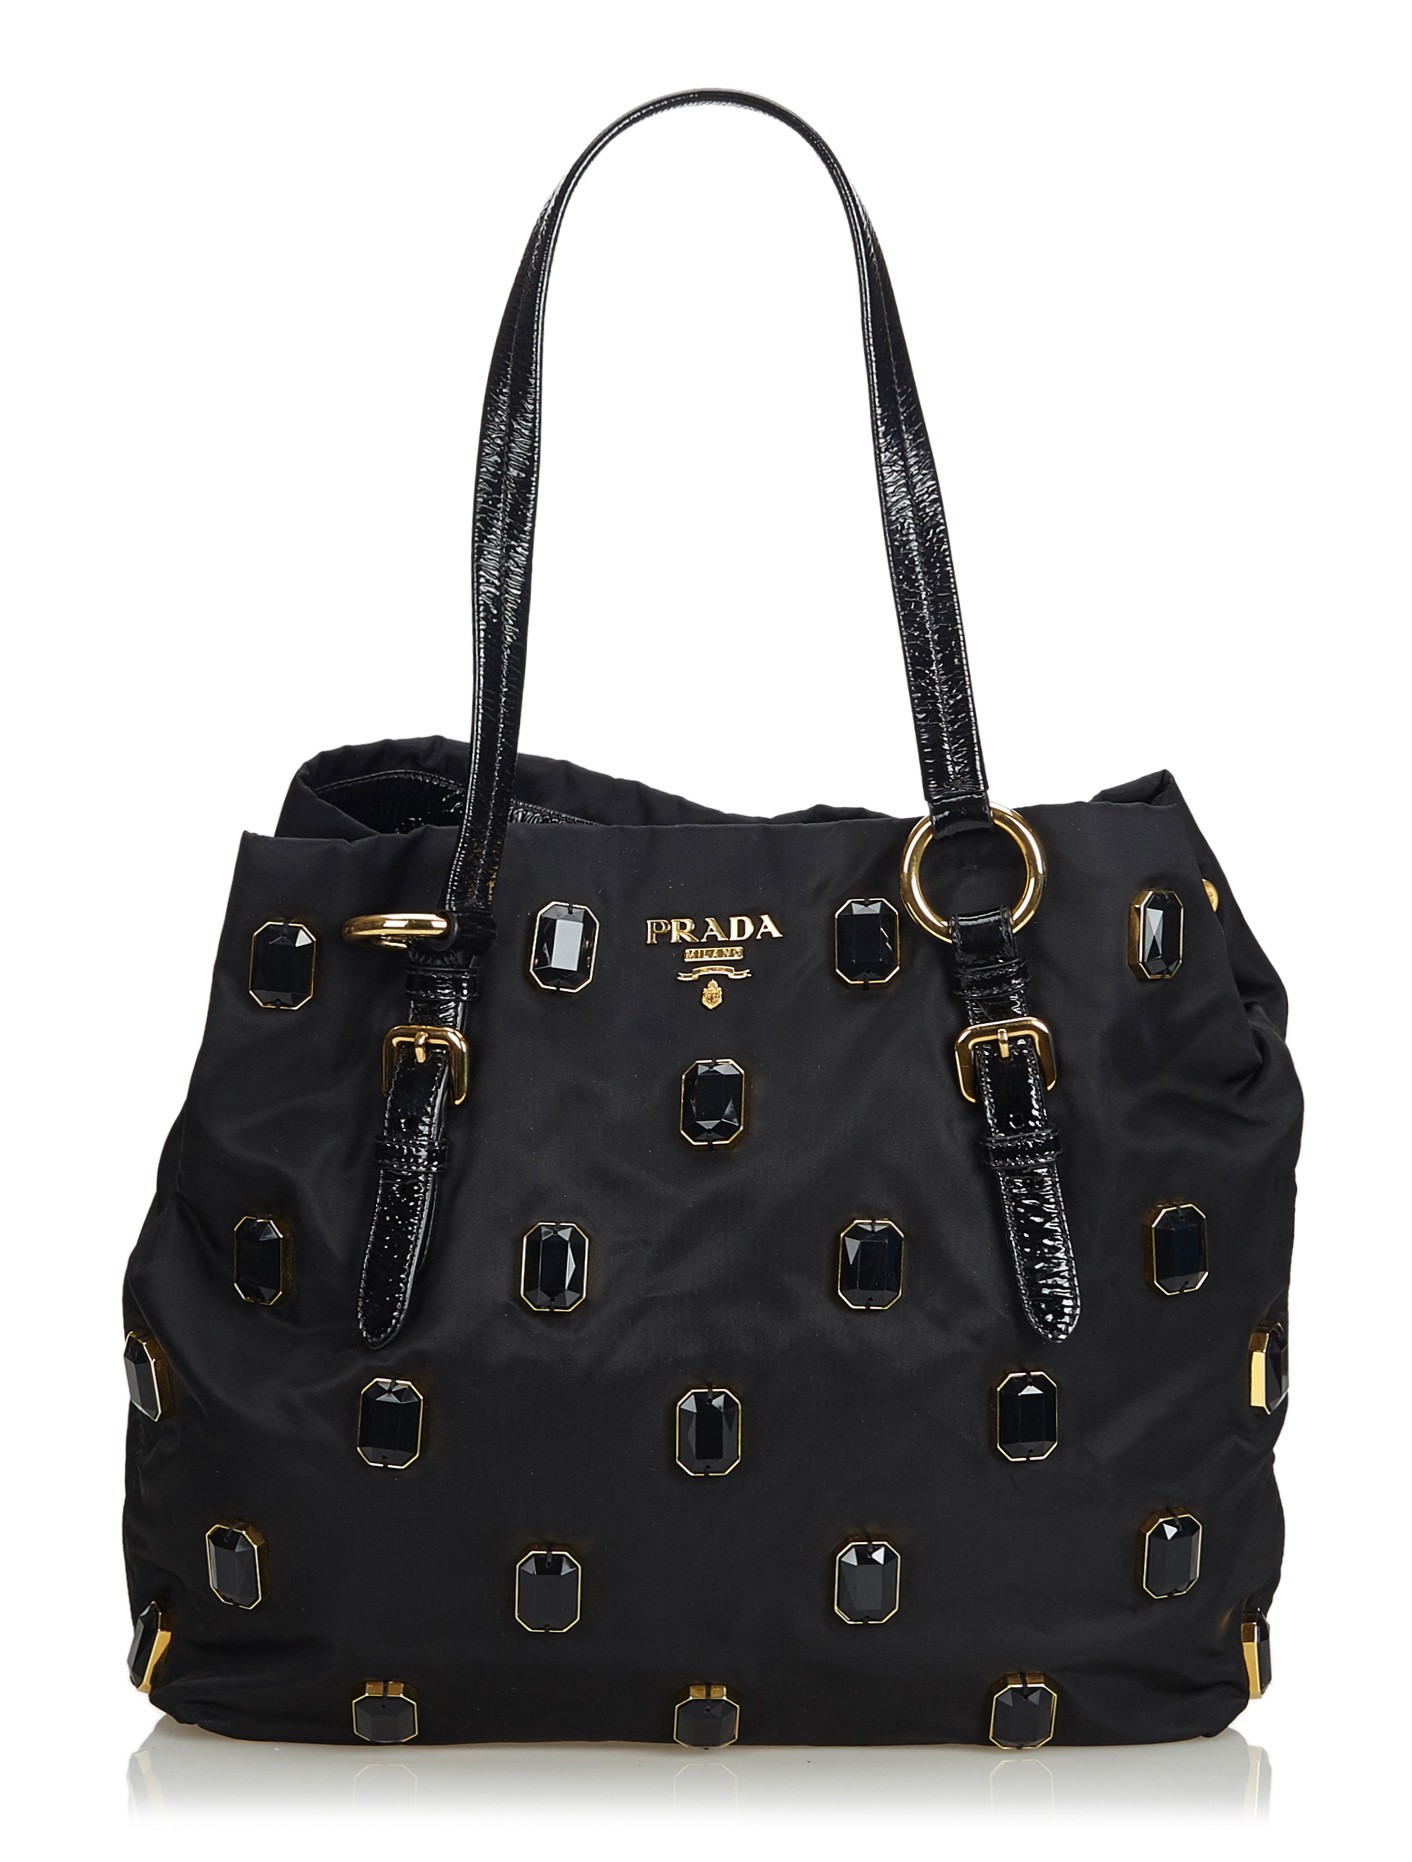 Prada Gray Nylon Tessuto Tote Bag (Neverfull style), Luxury, Bags